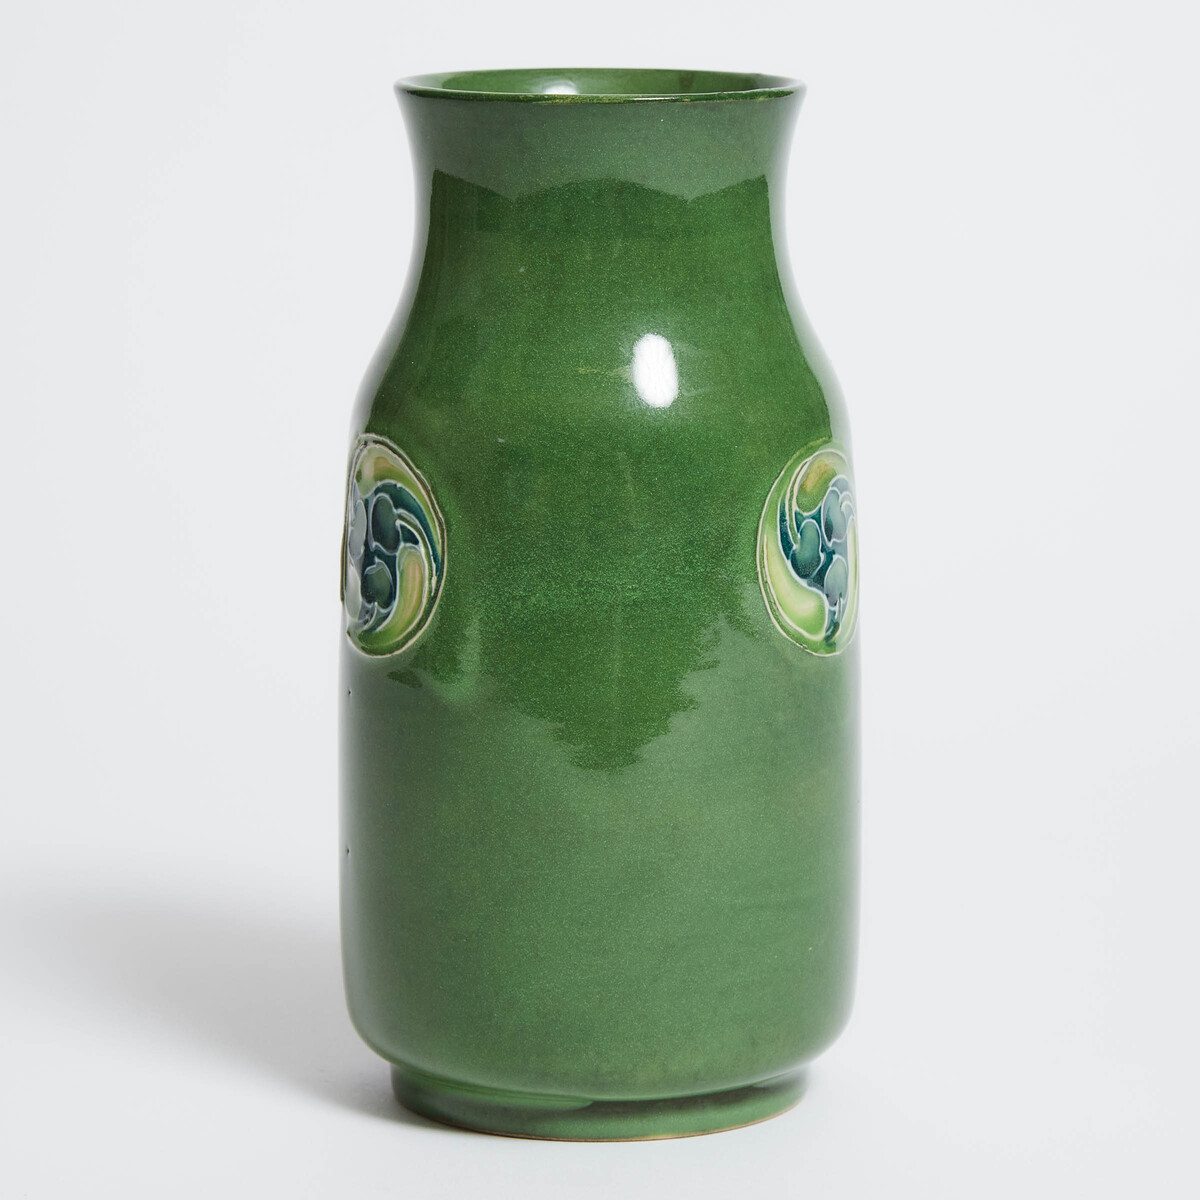 Macintyre Moorcroft Green Flamminian Vase, for Liberty & Co., c.1906-13, height 7.3 in — 18.5 cm - Image 2 of 3